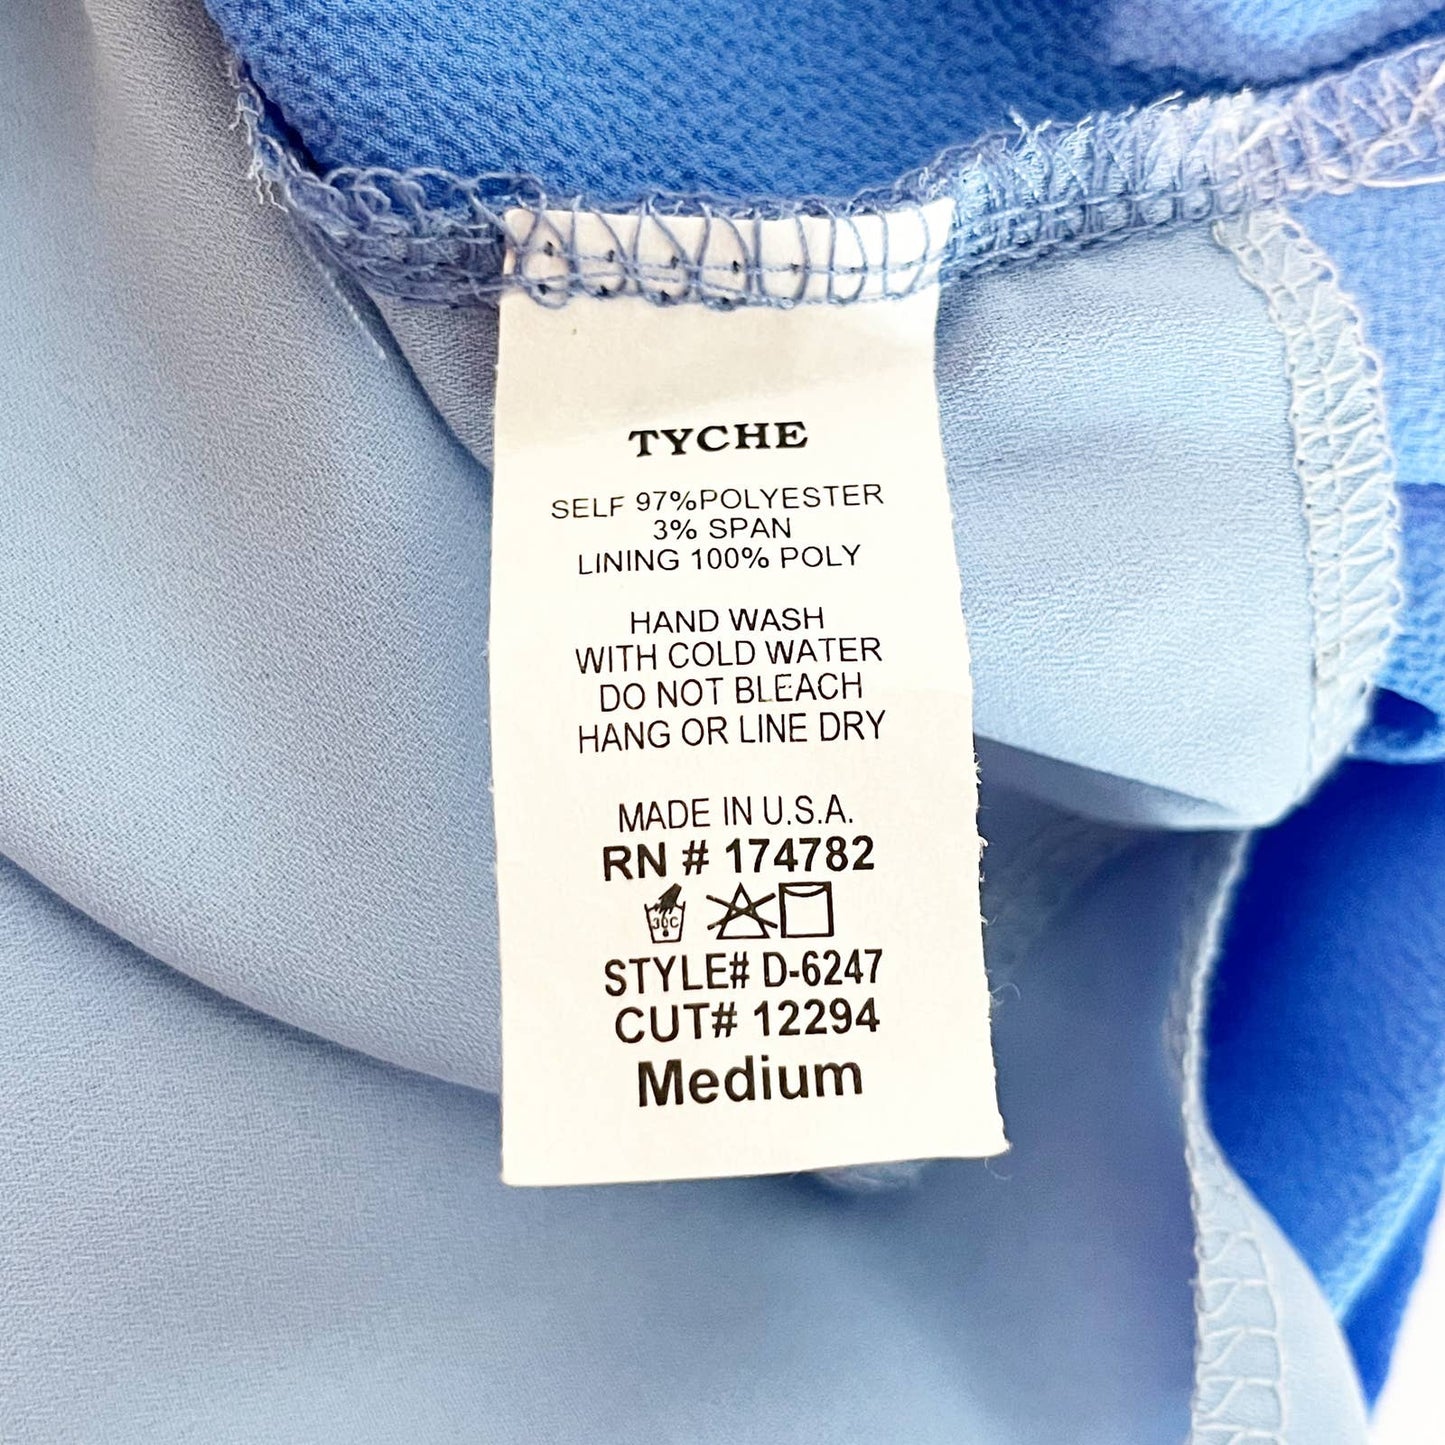 Vici Short Balloon Sleeve Back Keyhole Tie Waist Sheath Mini Dress Blue Medium